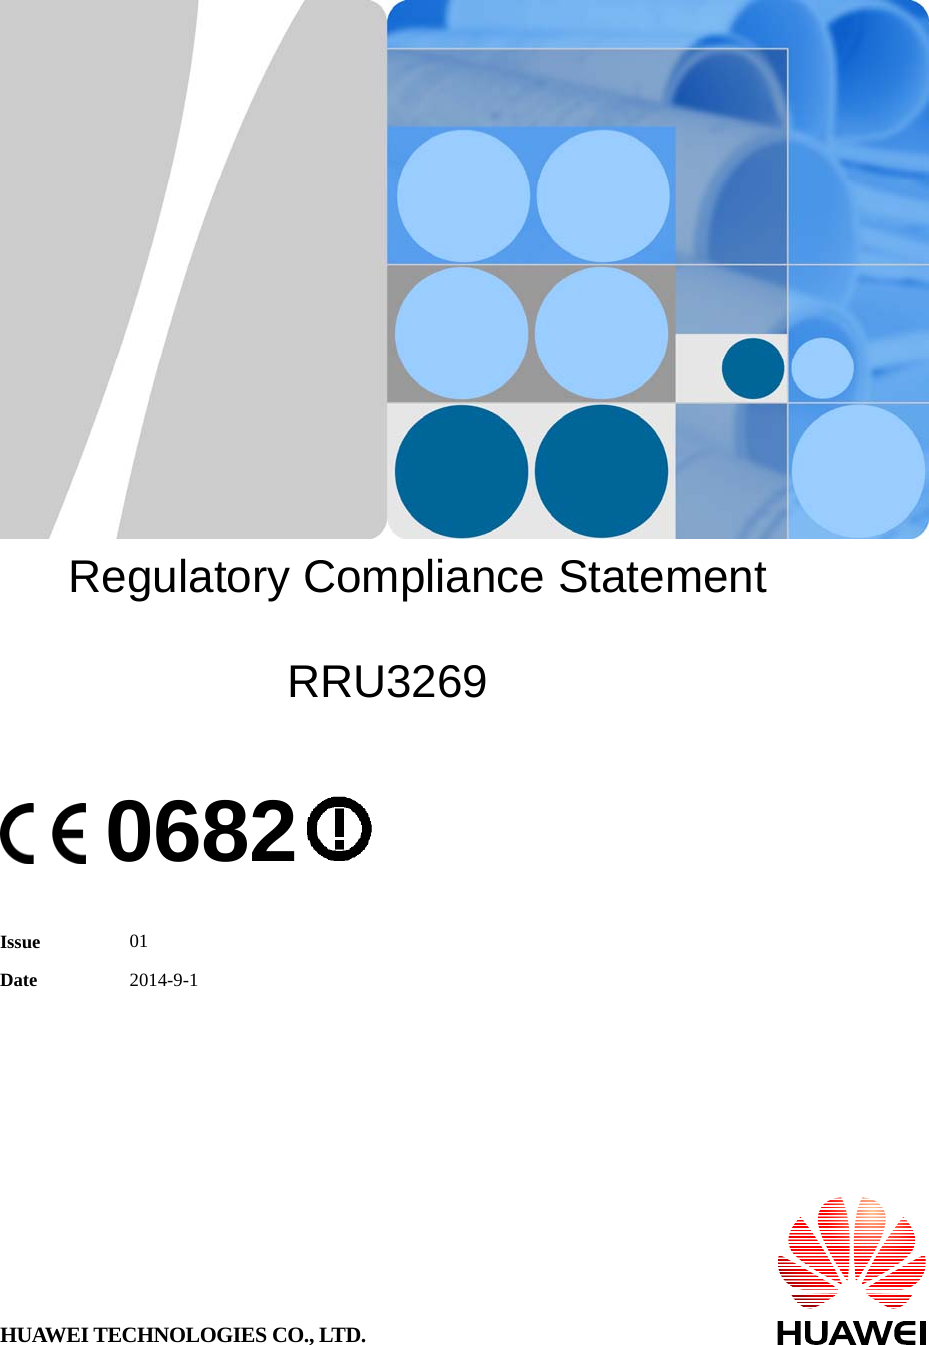        Regulatory Compliance Statement  RRU3269    0682   Issue  01 Date  2014-9-1 HUAWEI TECHNOLOGIES CO., LTD. 